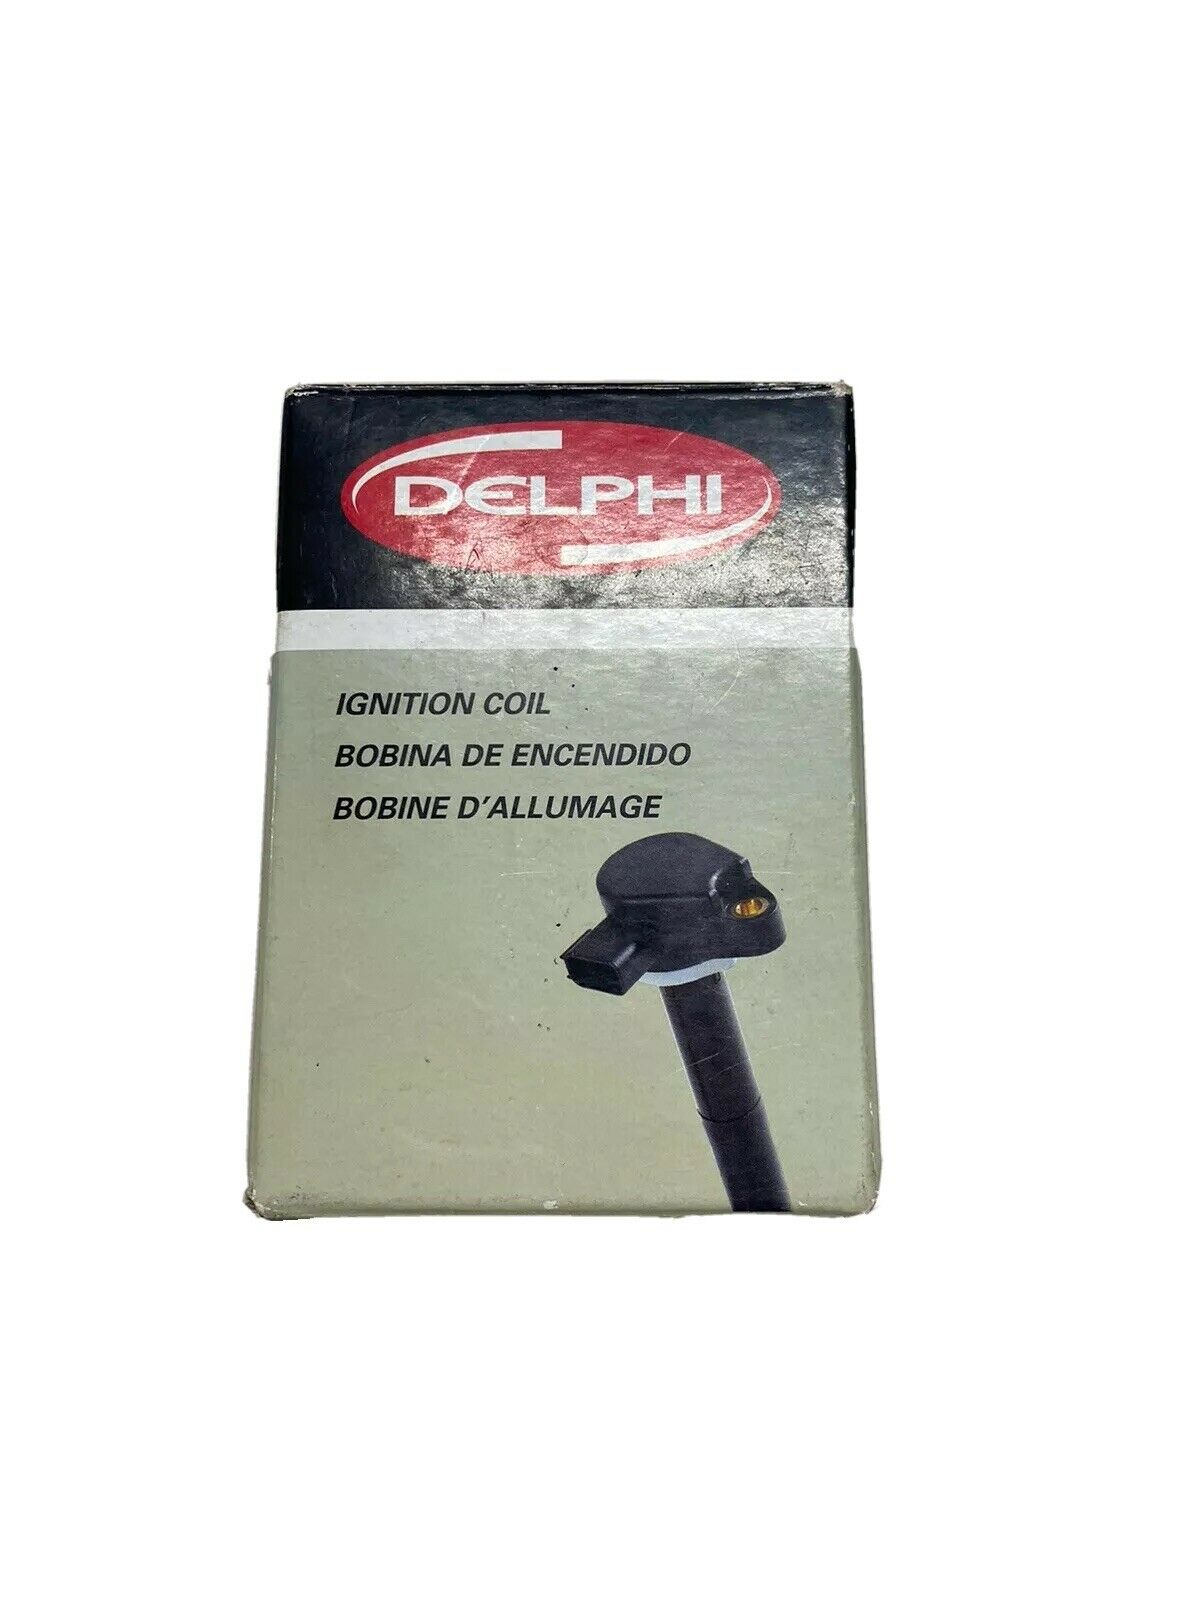 Delphi Ignition Coil - All AutomotiveParts